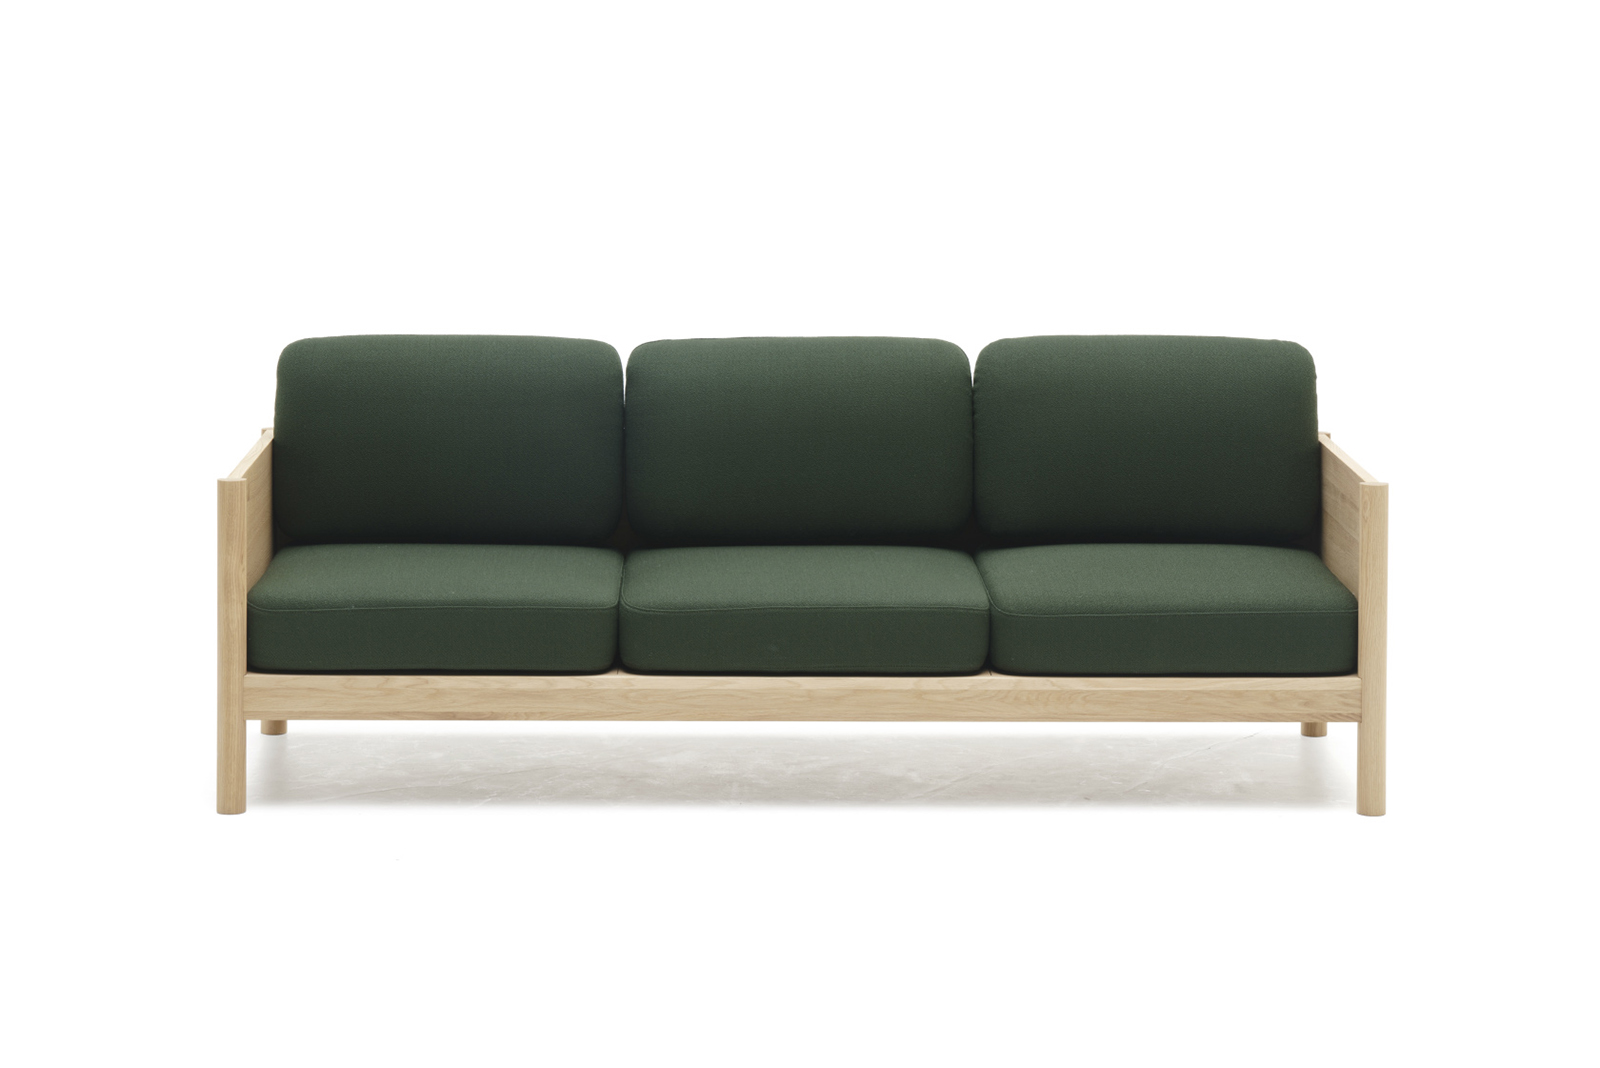 Castor Lobby Sofa 3-Seater ‒ KARIMOKU NEW STANDARD (KNS)